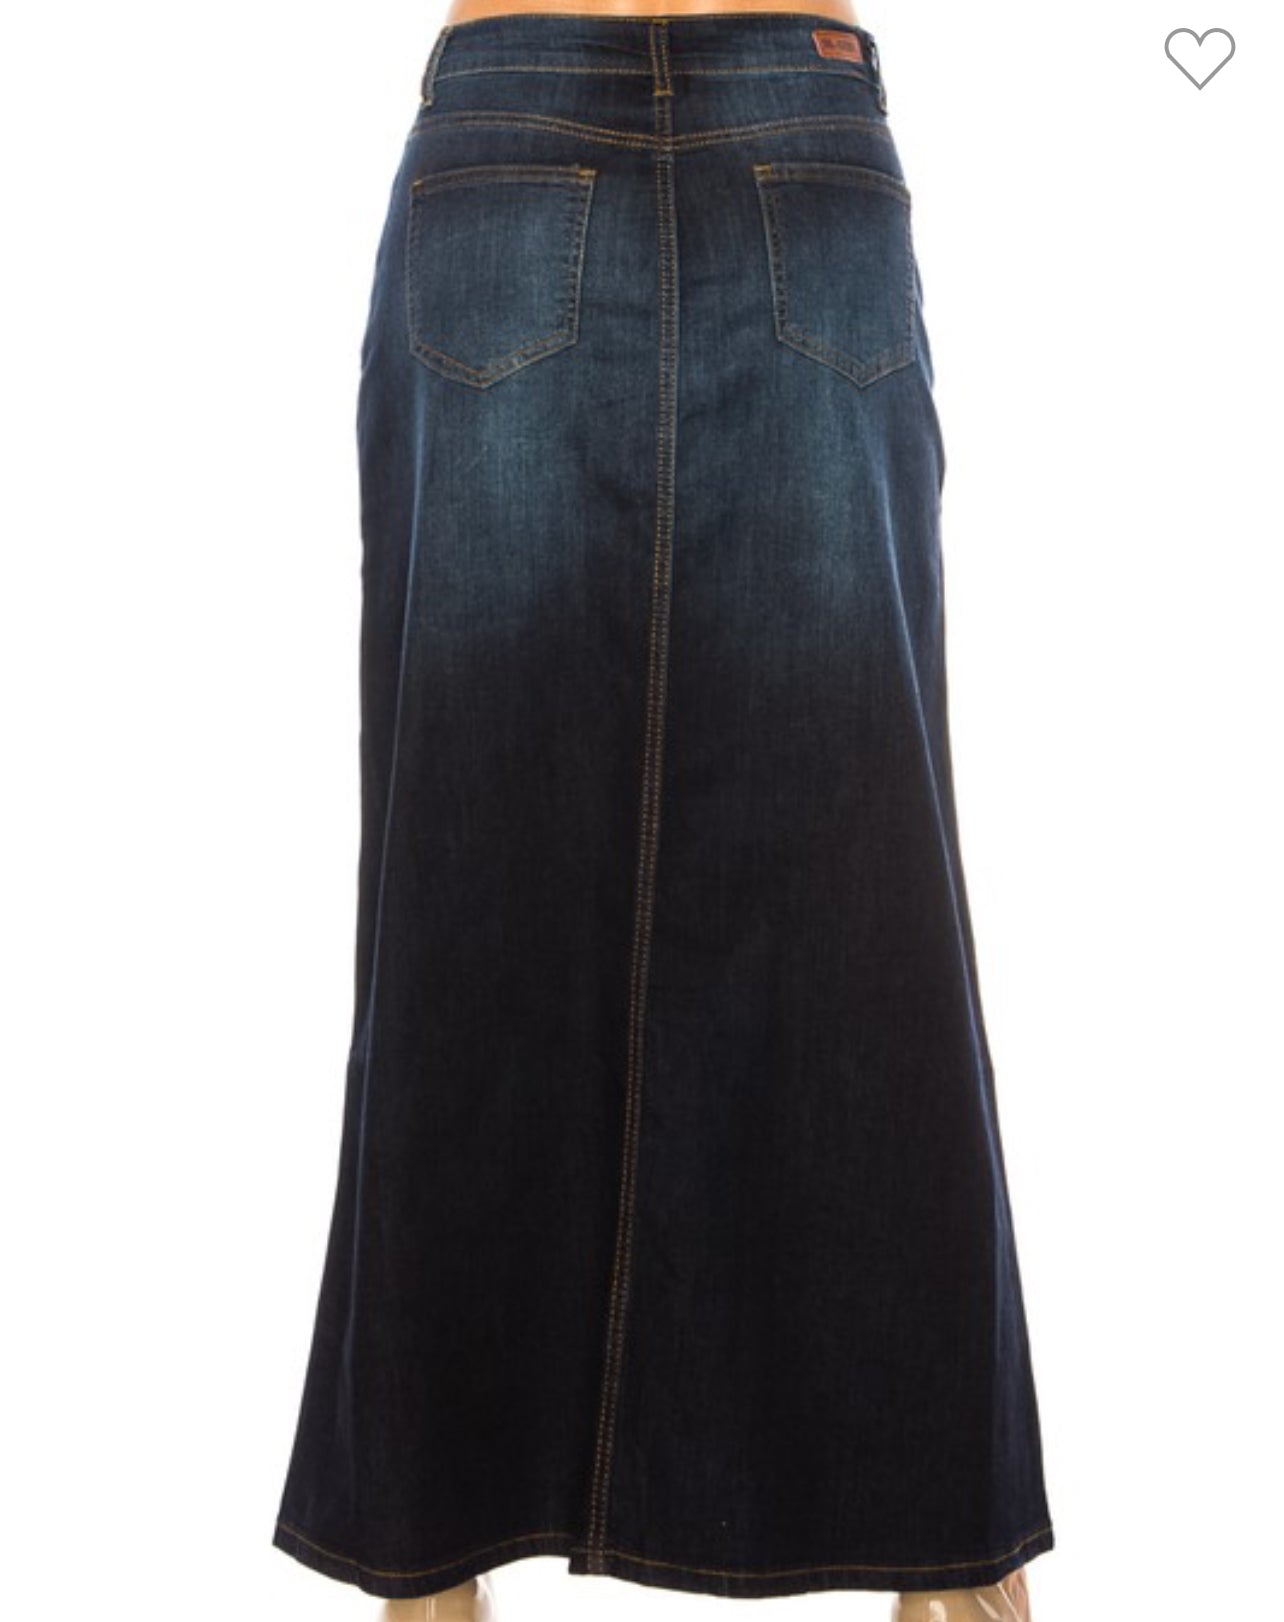 "Jessica Kate" Maxi Dark Denim Skirt